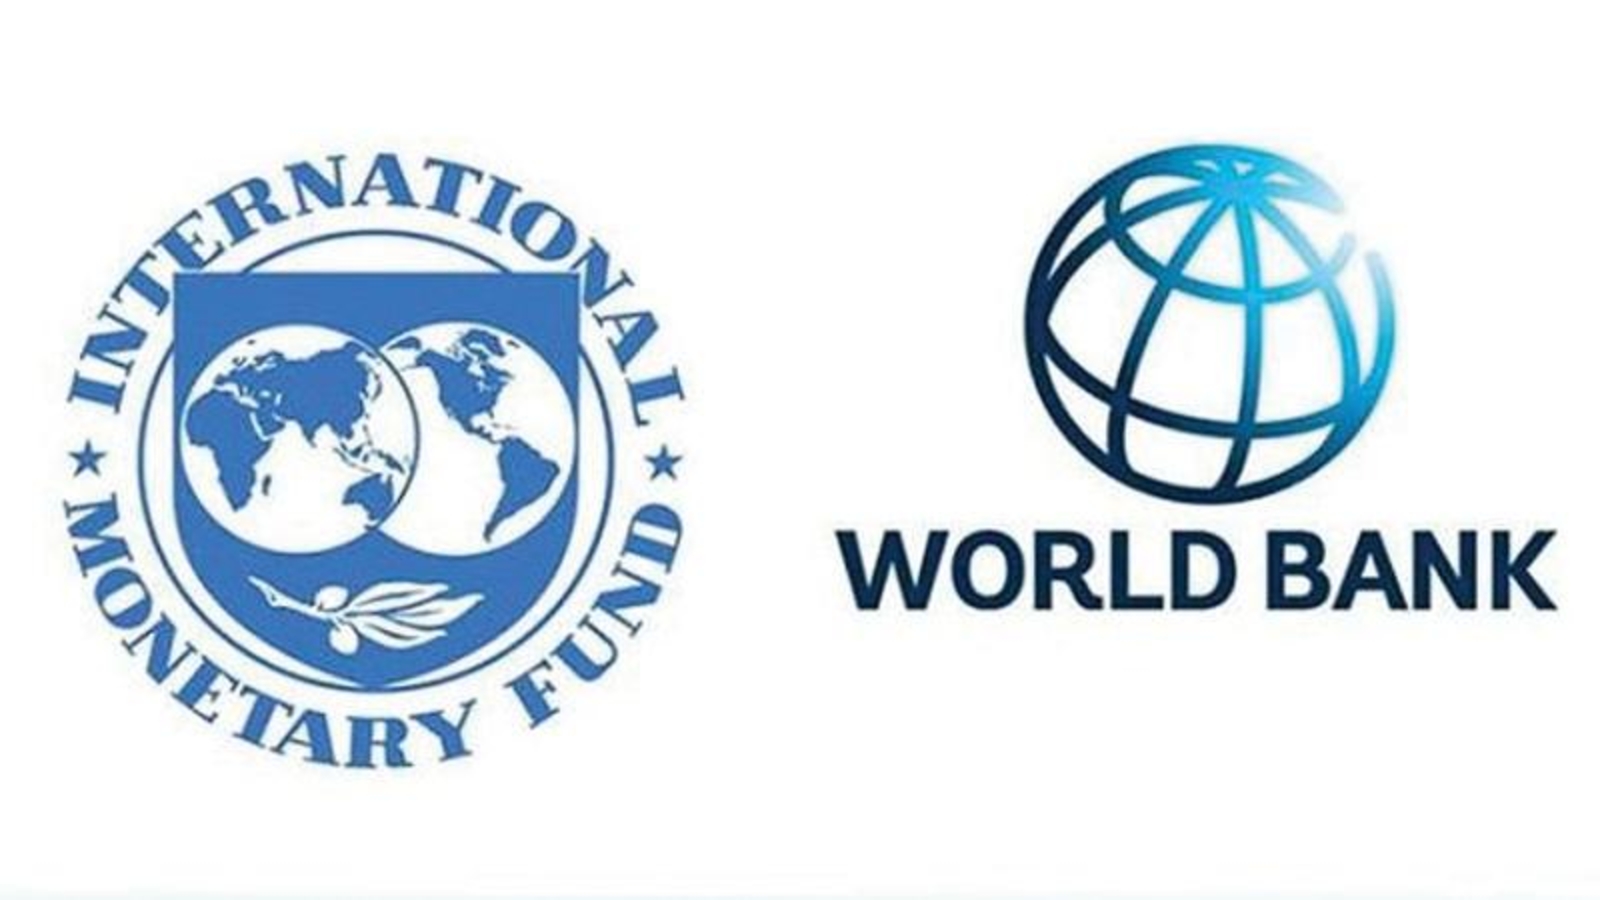 Валютный фонд и всемирный банк. Всемирный банк. Международный валютный фонд. МВФ И Всемирный банк. Всемирный банк ООН.